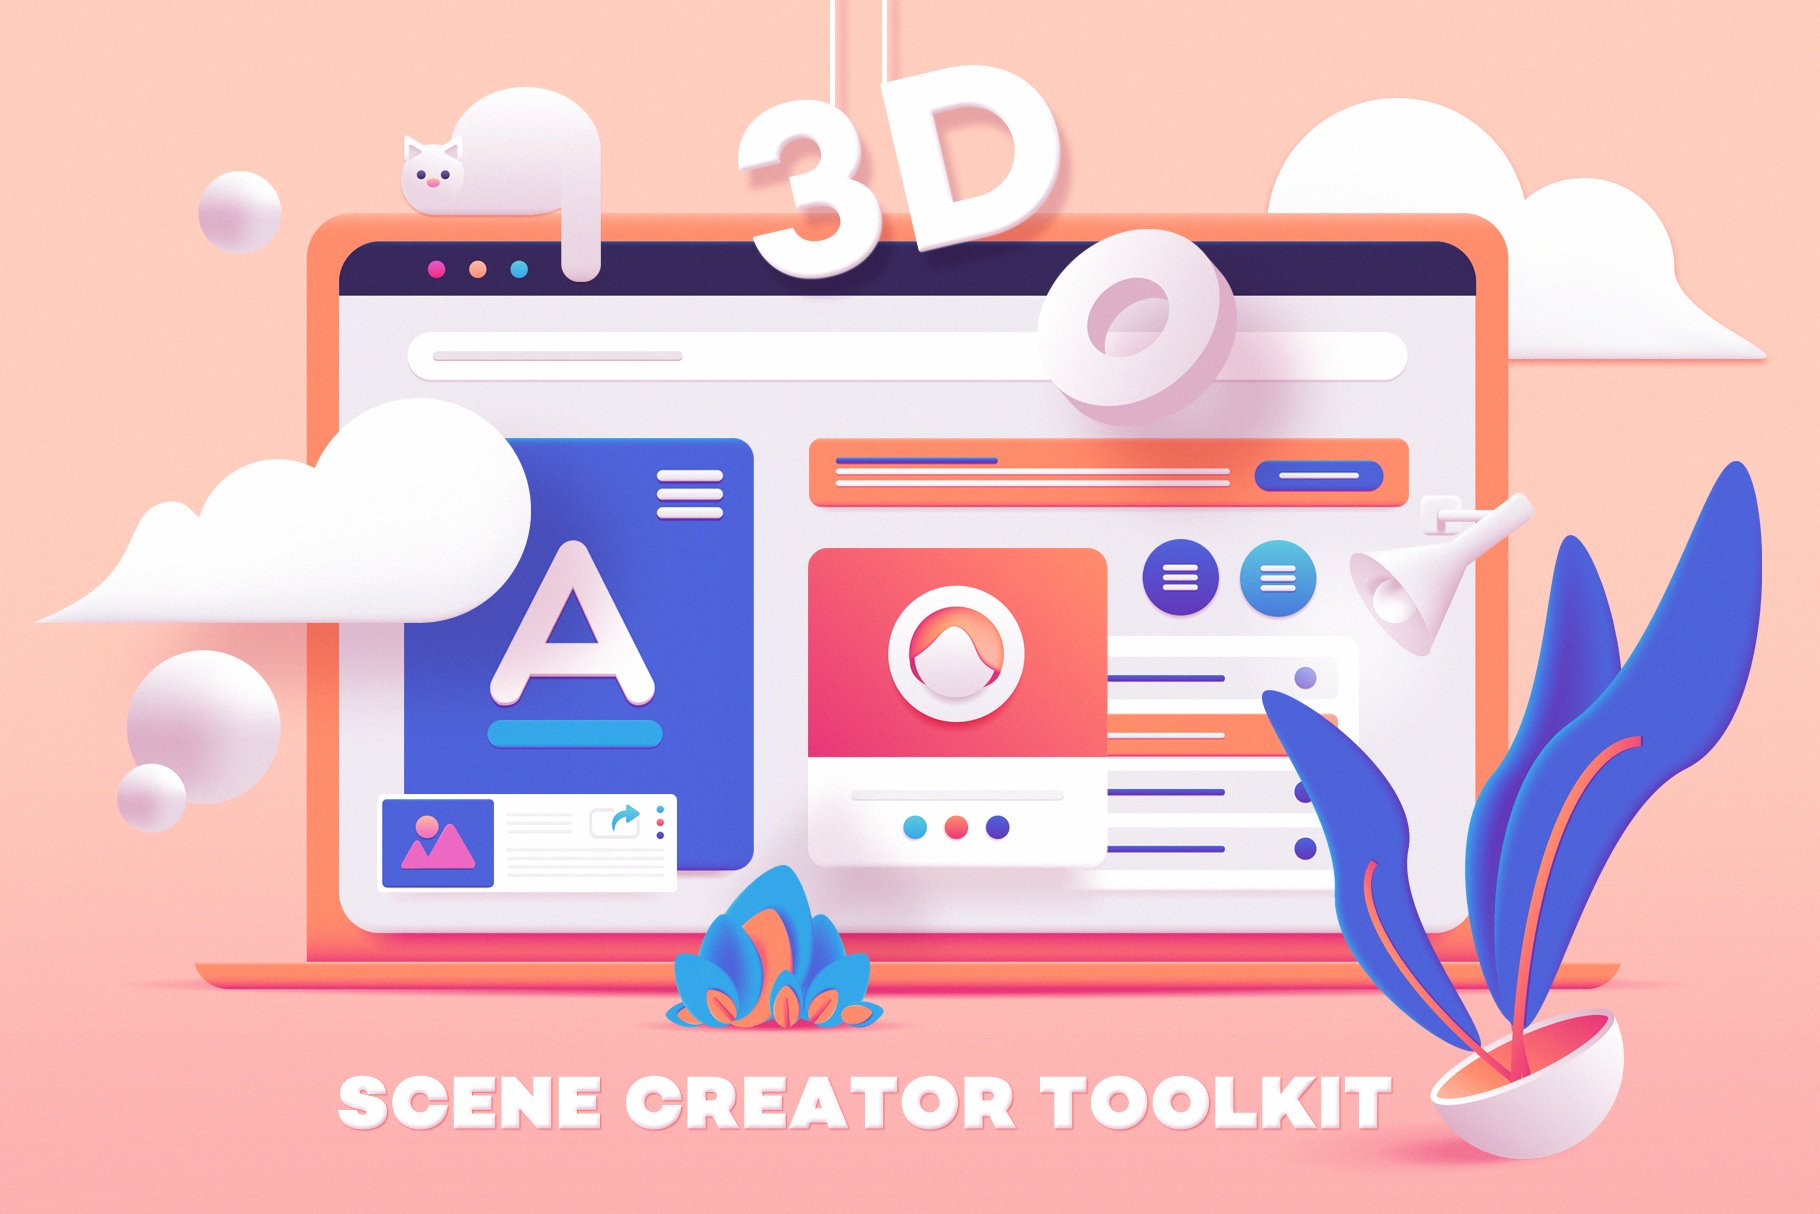 3D Toolkit-UI Elements Scene Creator cover image.